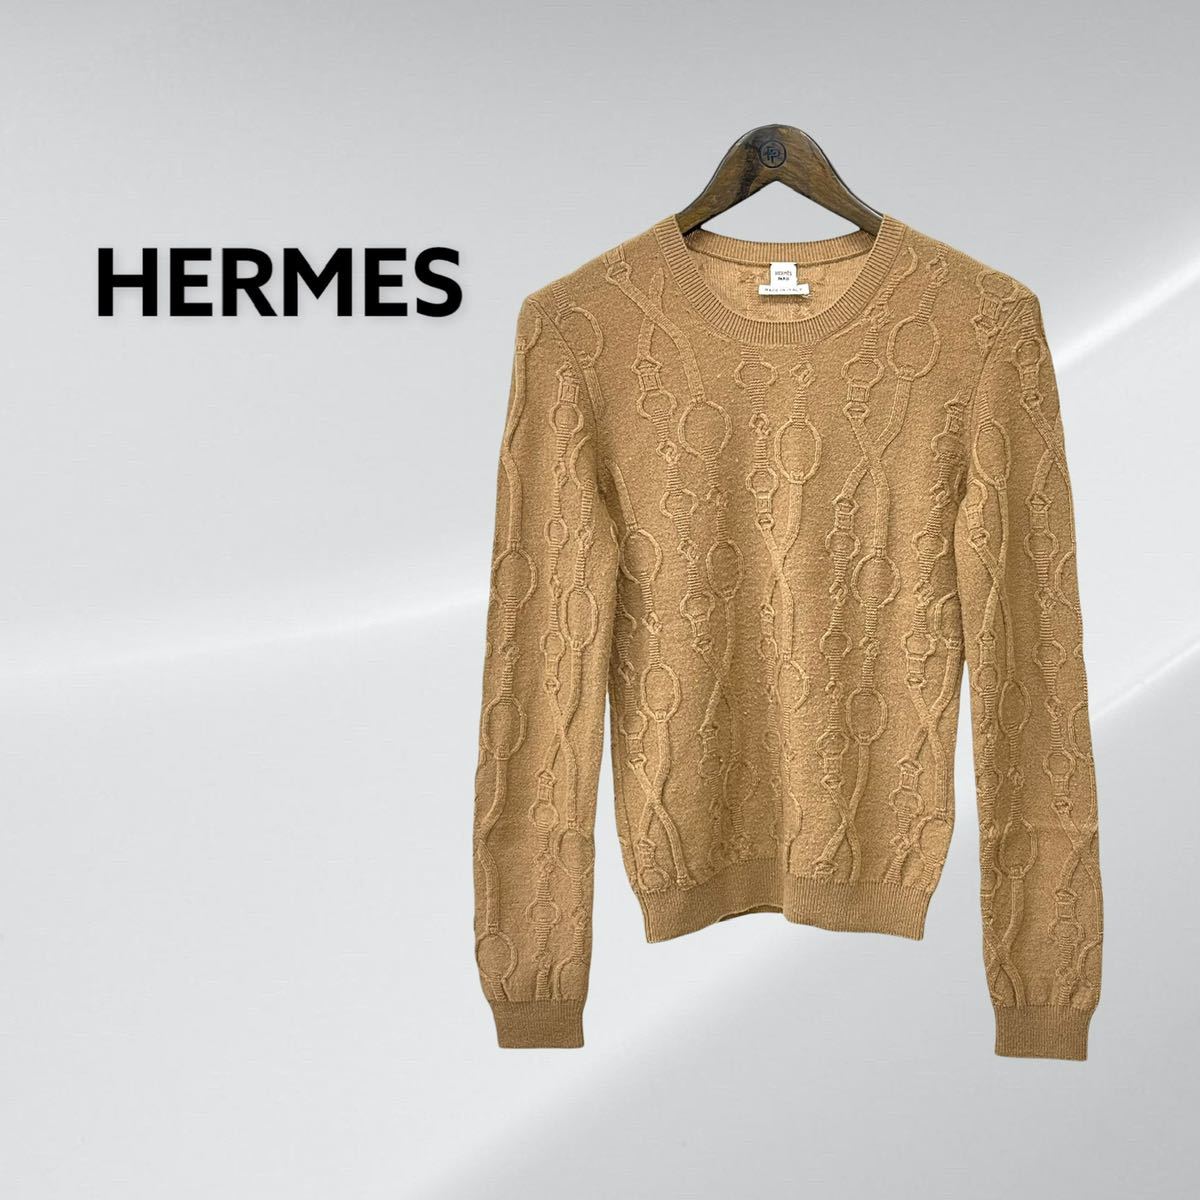 HERMES エルメス カシミヤ100% ベルト柄 総柄 超歓迎された レディース ニット 輸入 長袖 セーター